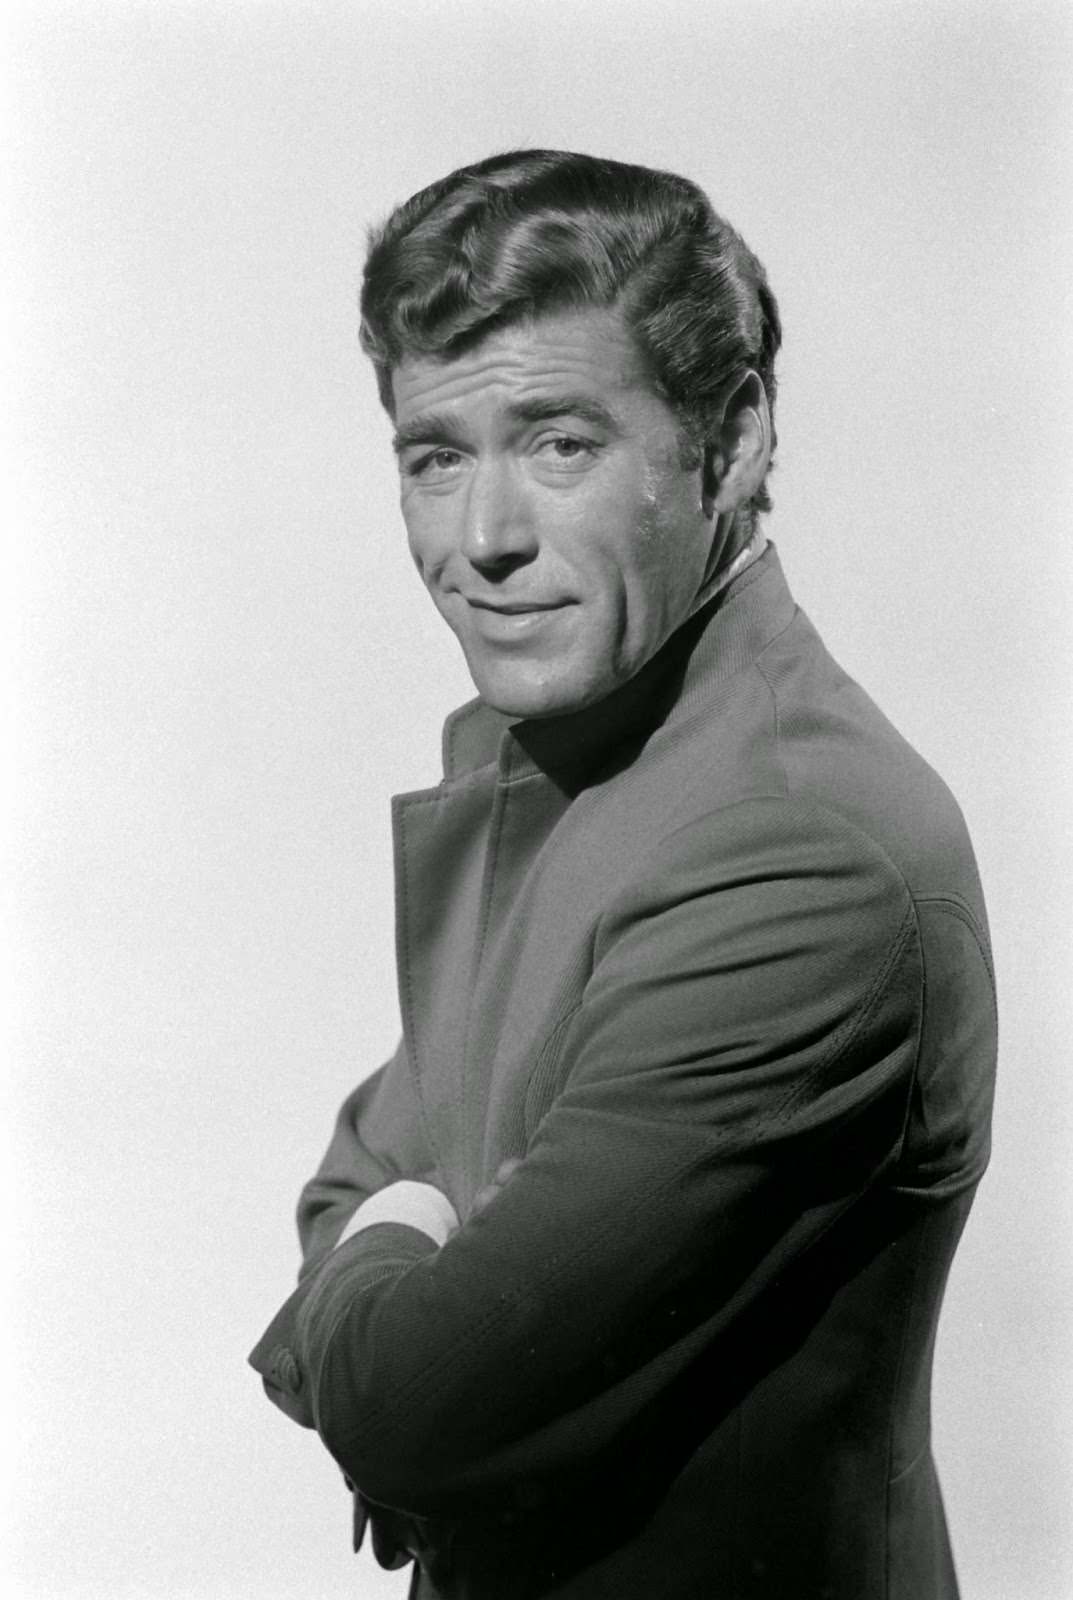 James Bond audition finalist Anthony Rogers, 1967.